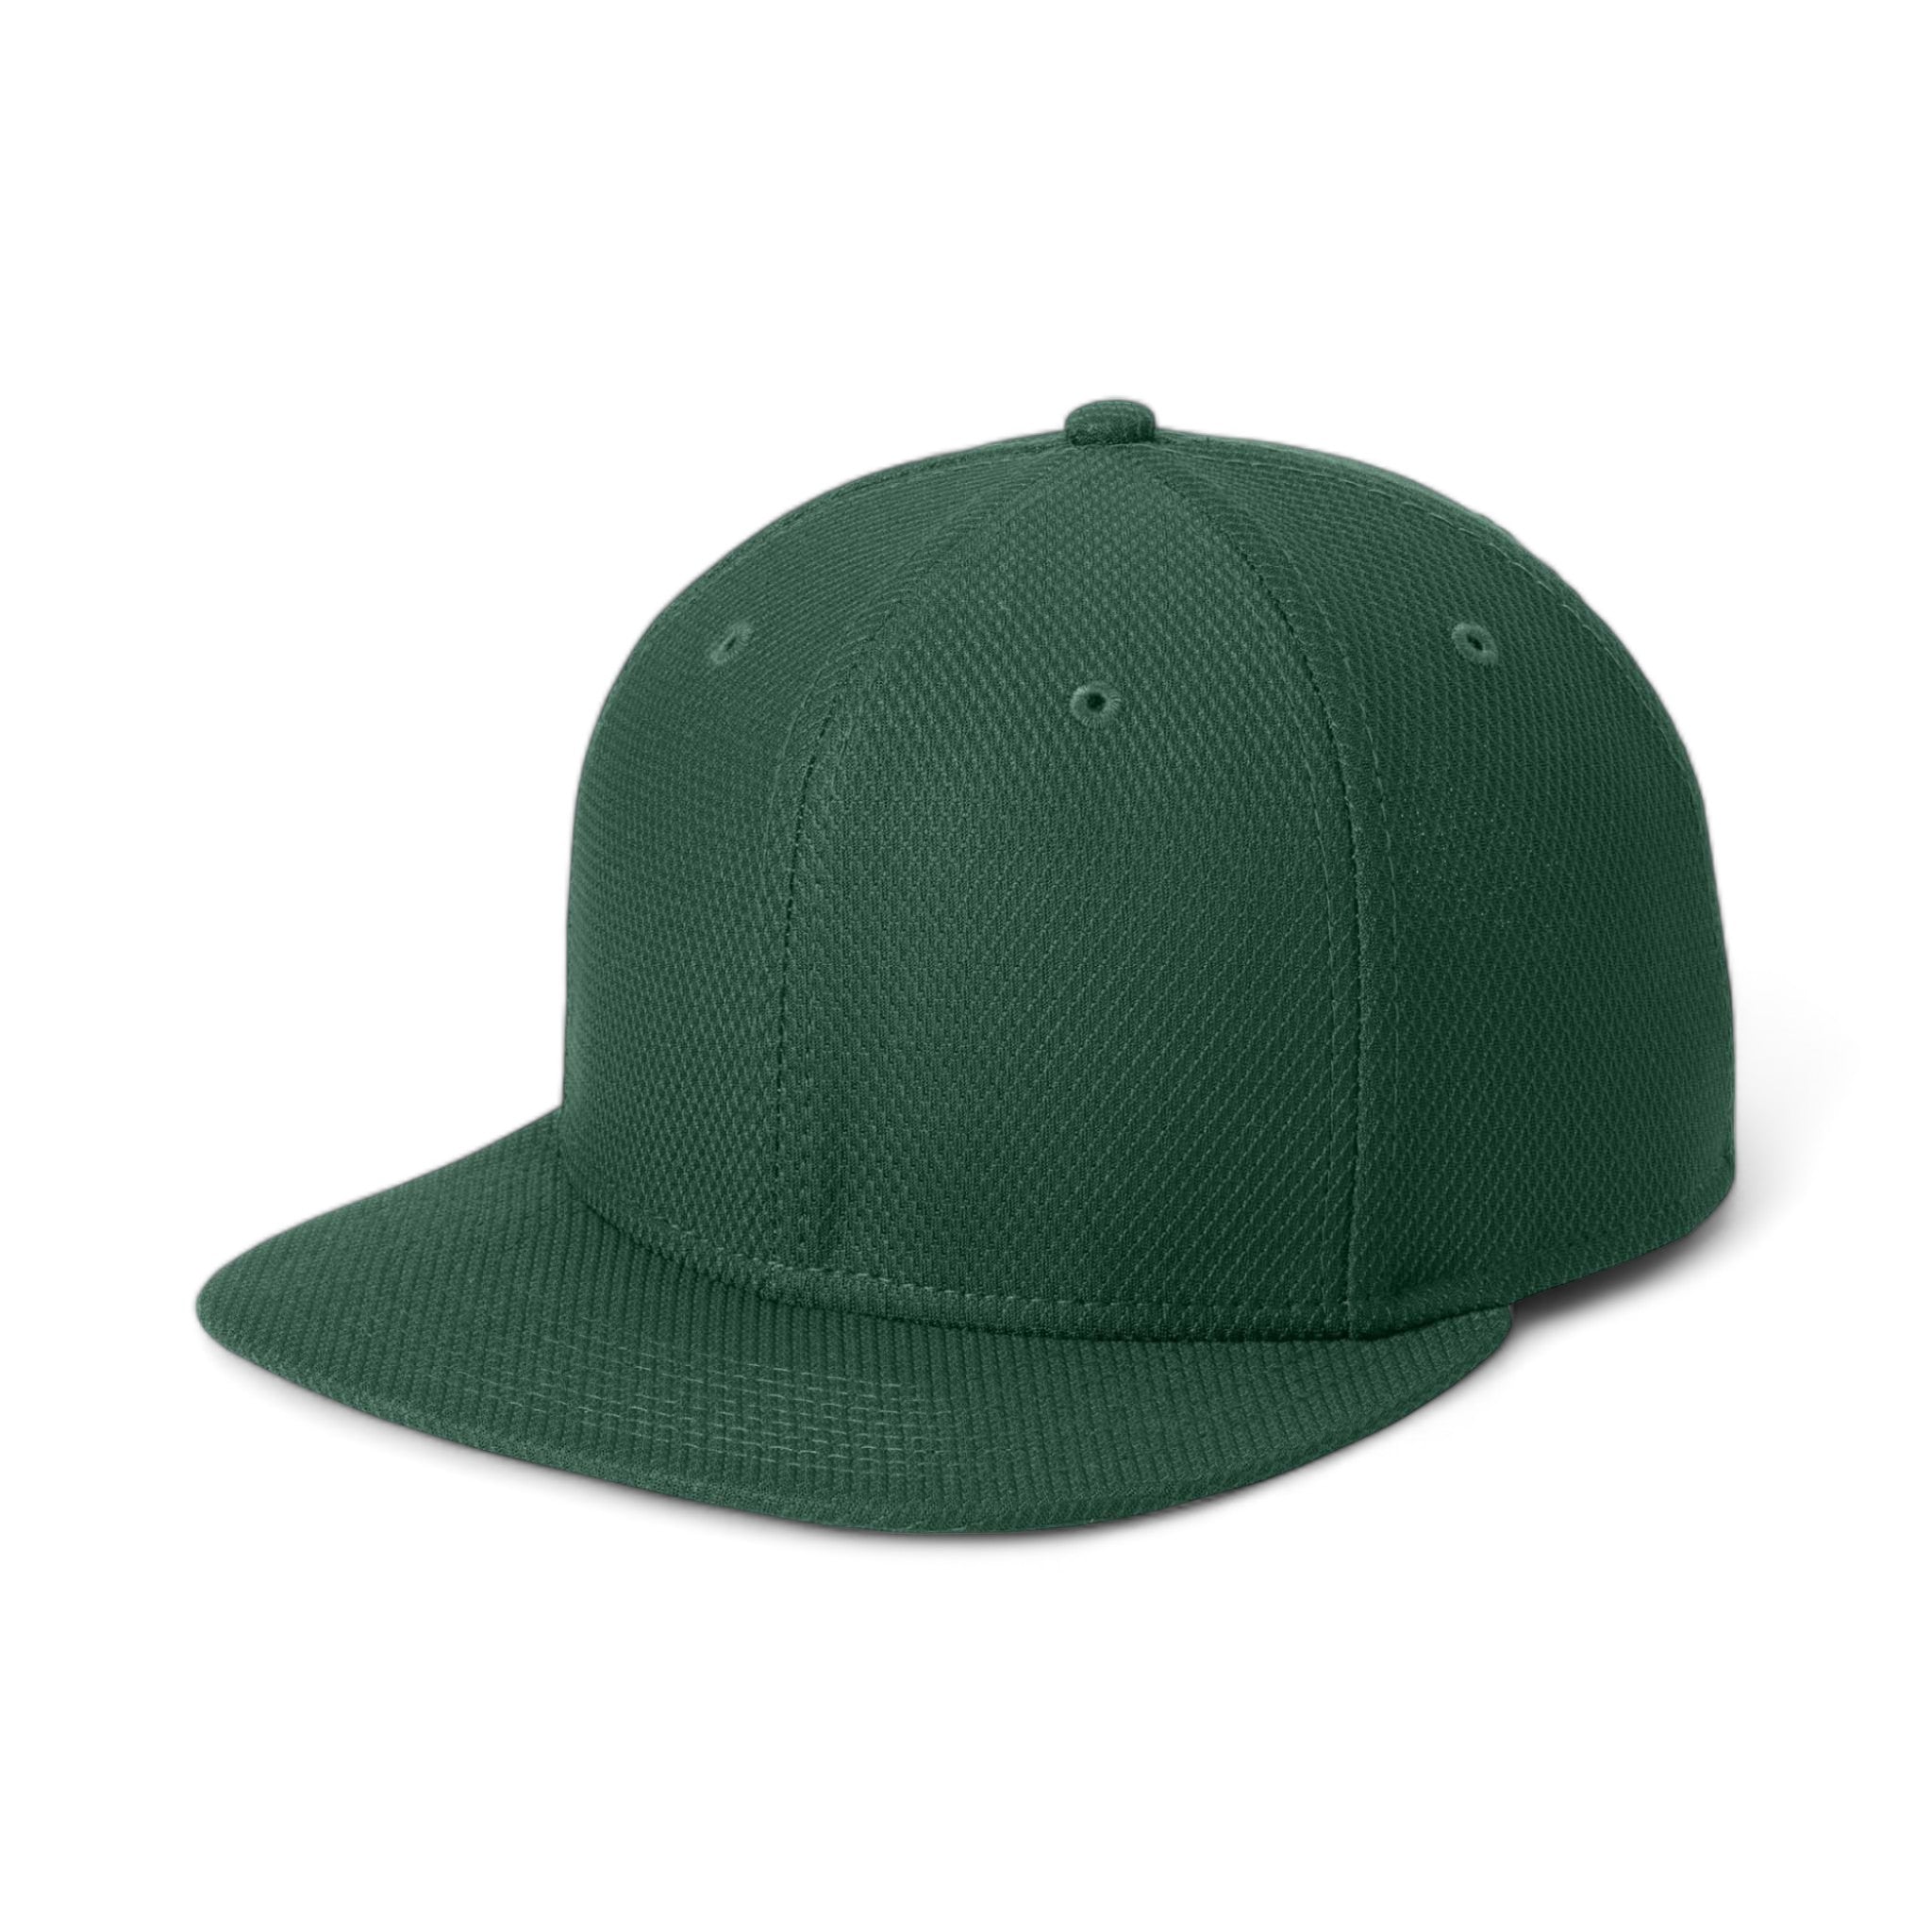 Side view of New Era NE404 custom hat in dark green